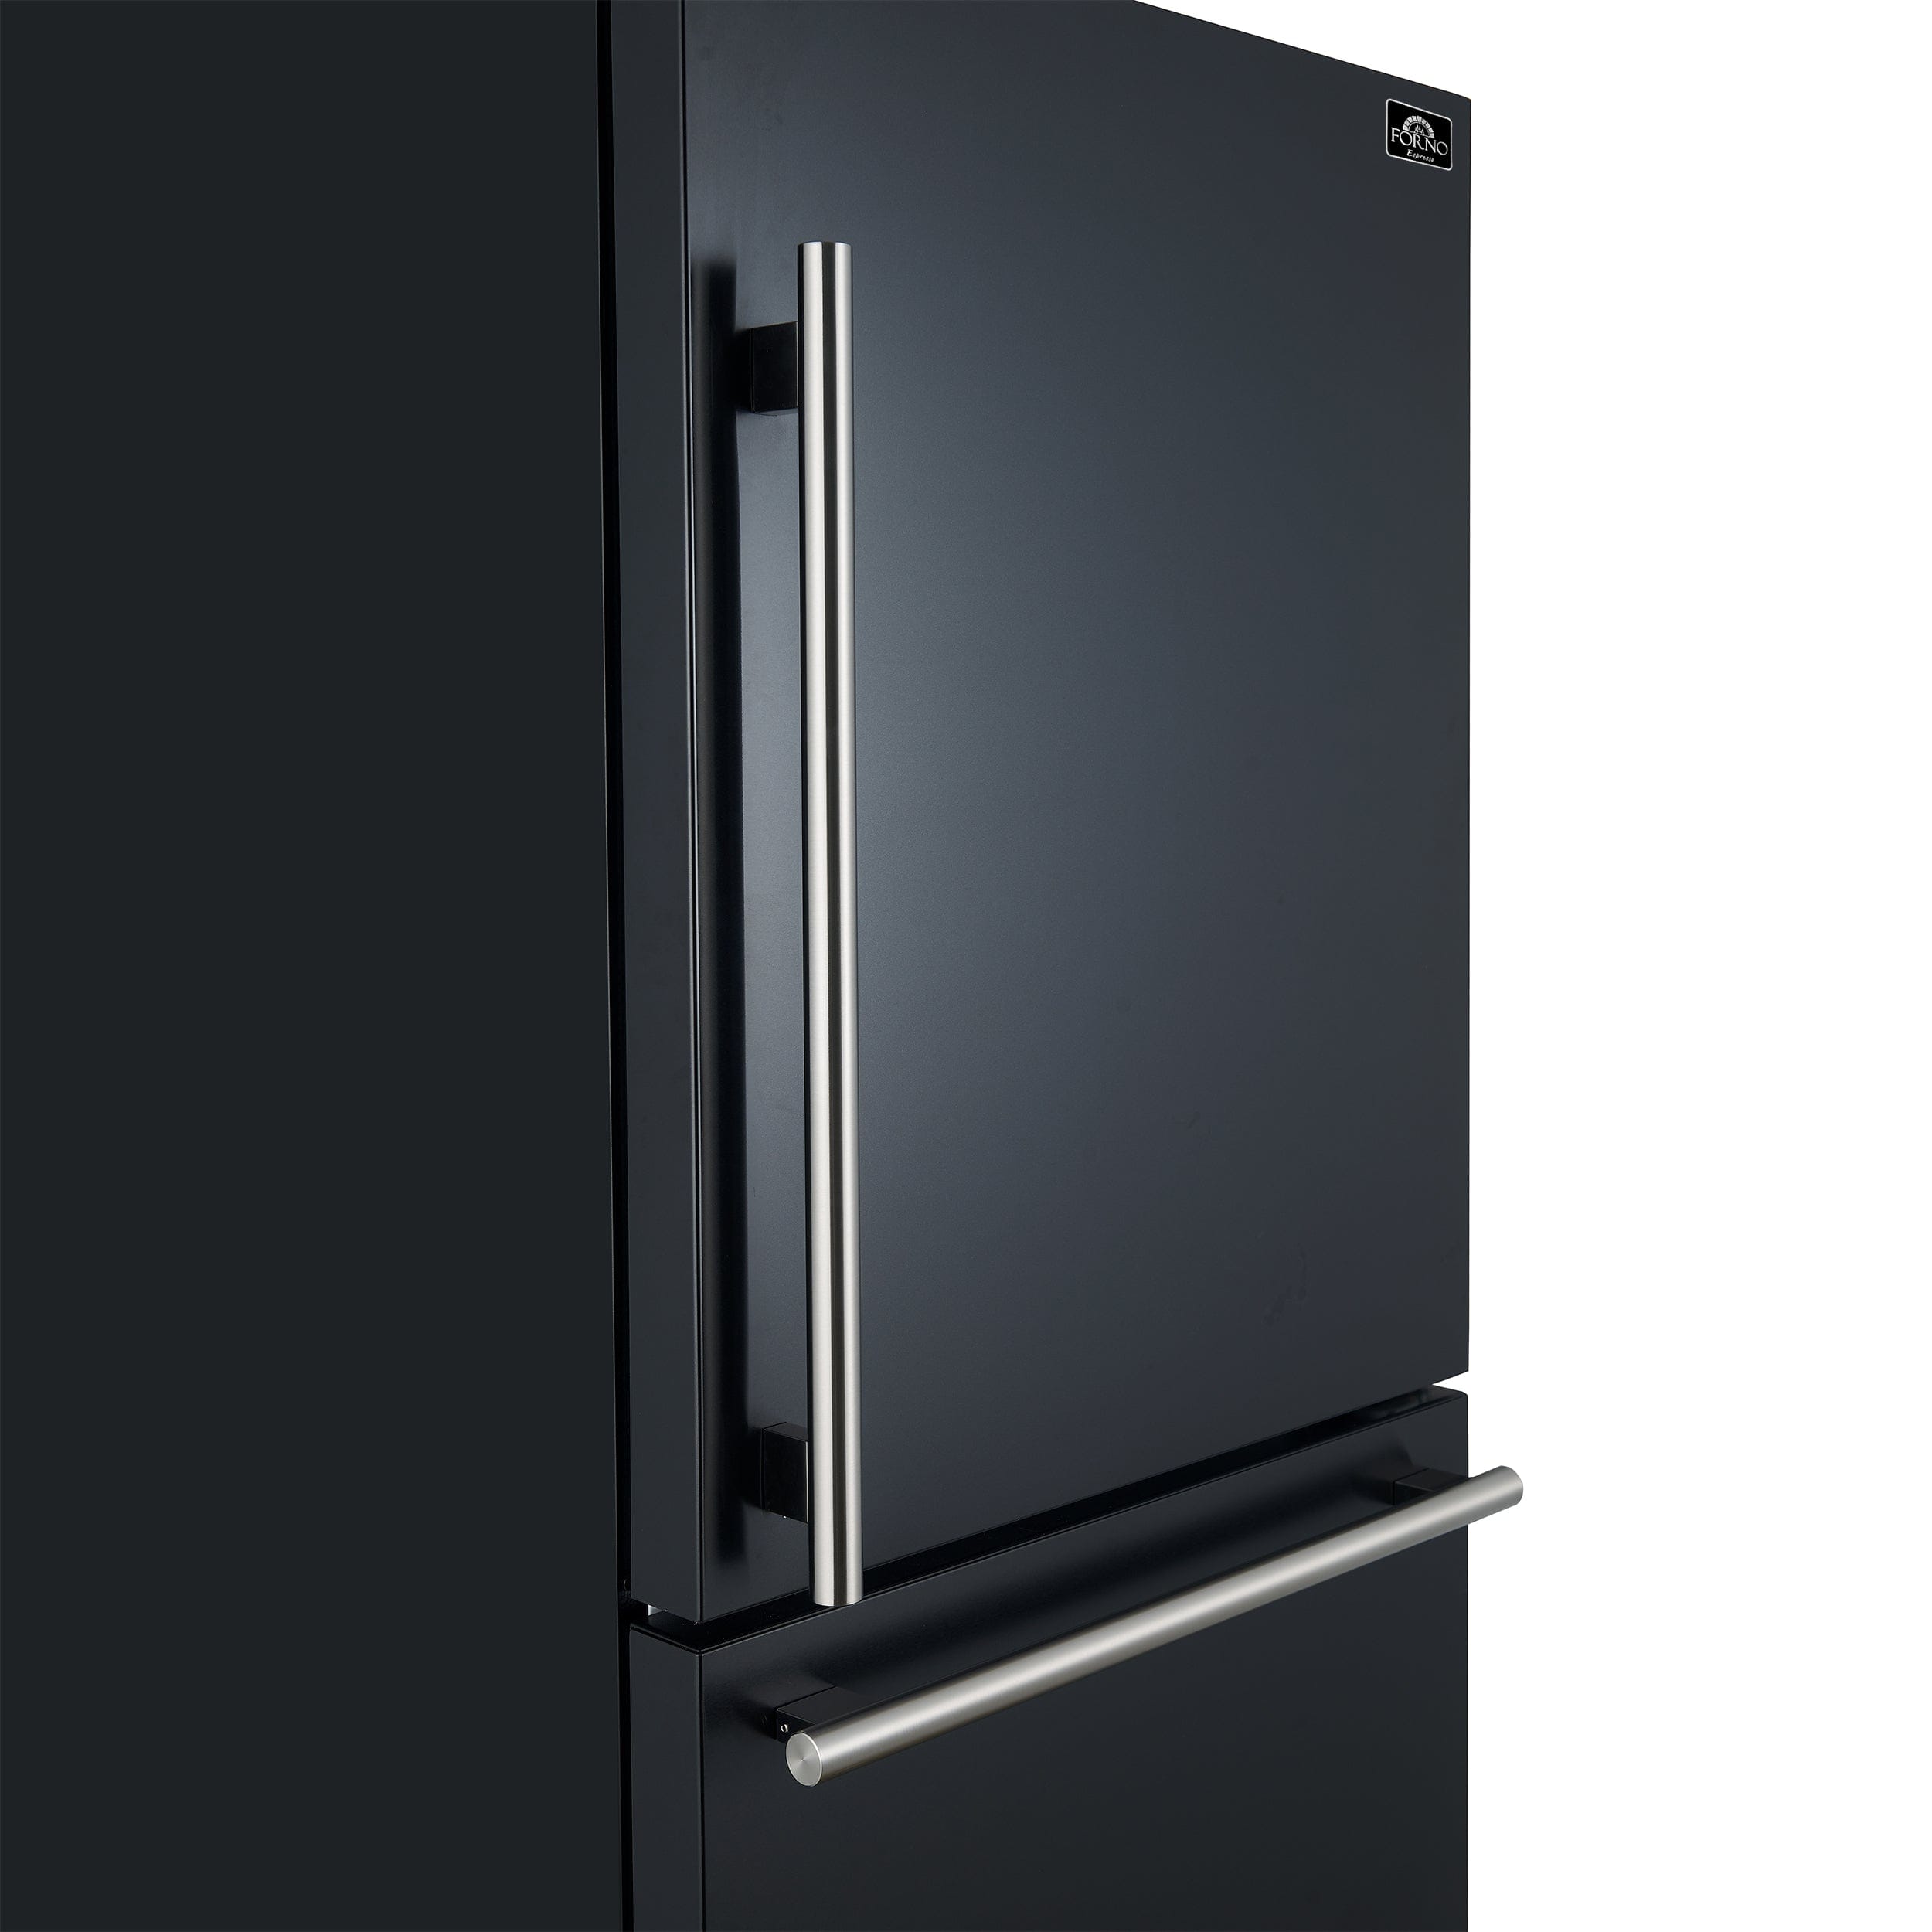 Forno Milano Espresso 31-Inch 17.2 cu. ft. Bottom Freezer Right Swing Door Refrigerator in Black with Brass Handle (FFFFD1785-31BLK) Wine Coolers Empire